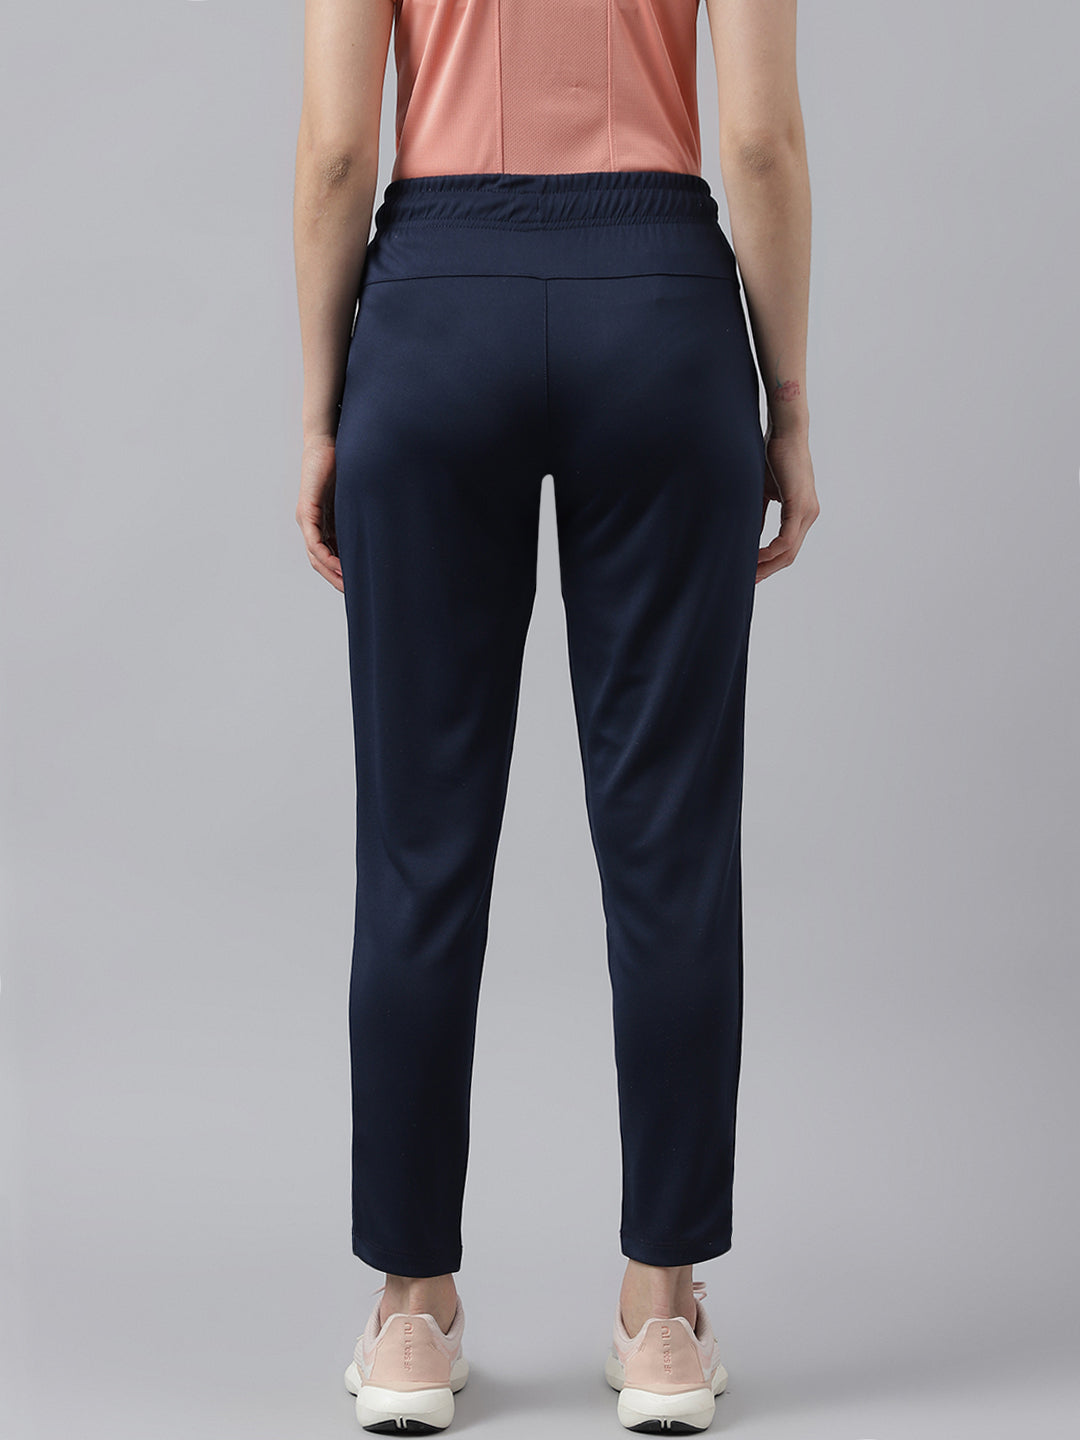 Alcis Women's Navy Anti-Static Drytech+ Slim-Fit Training Track Pants